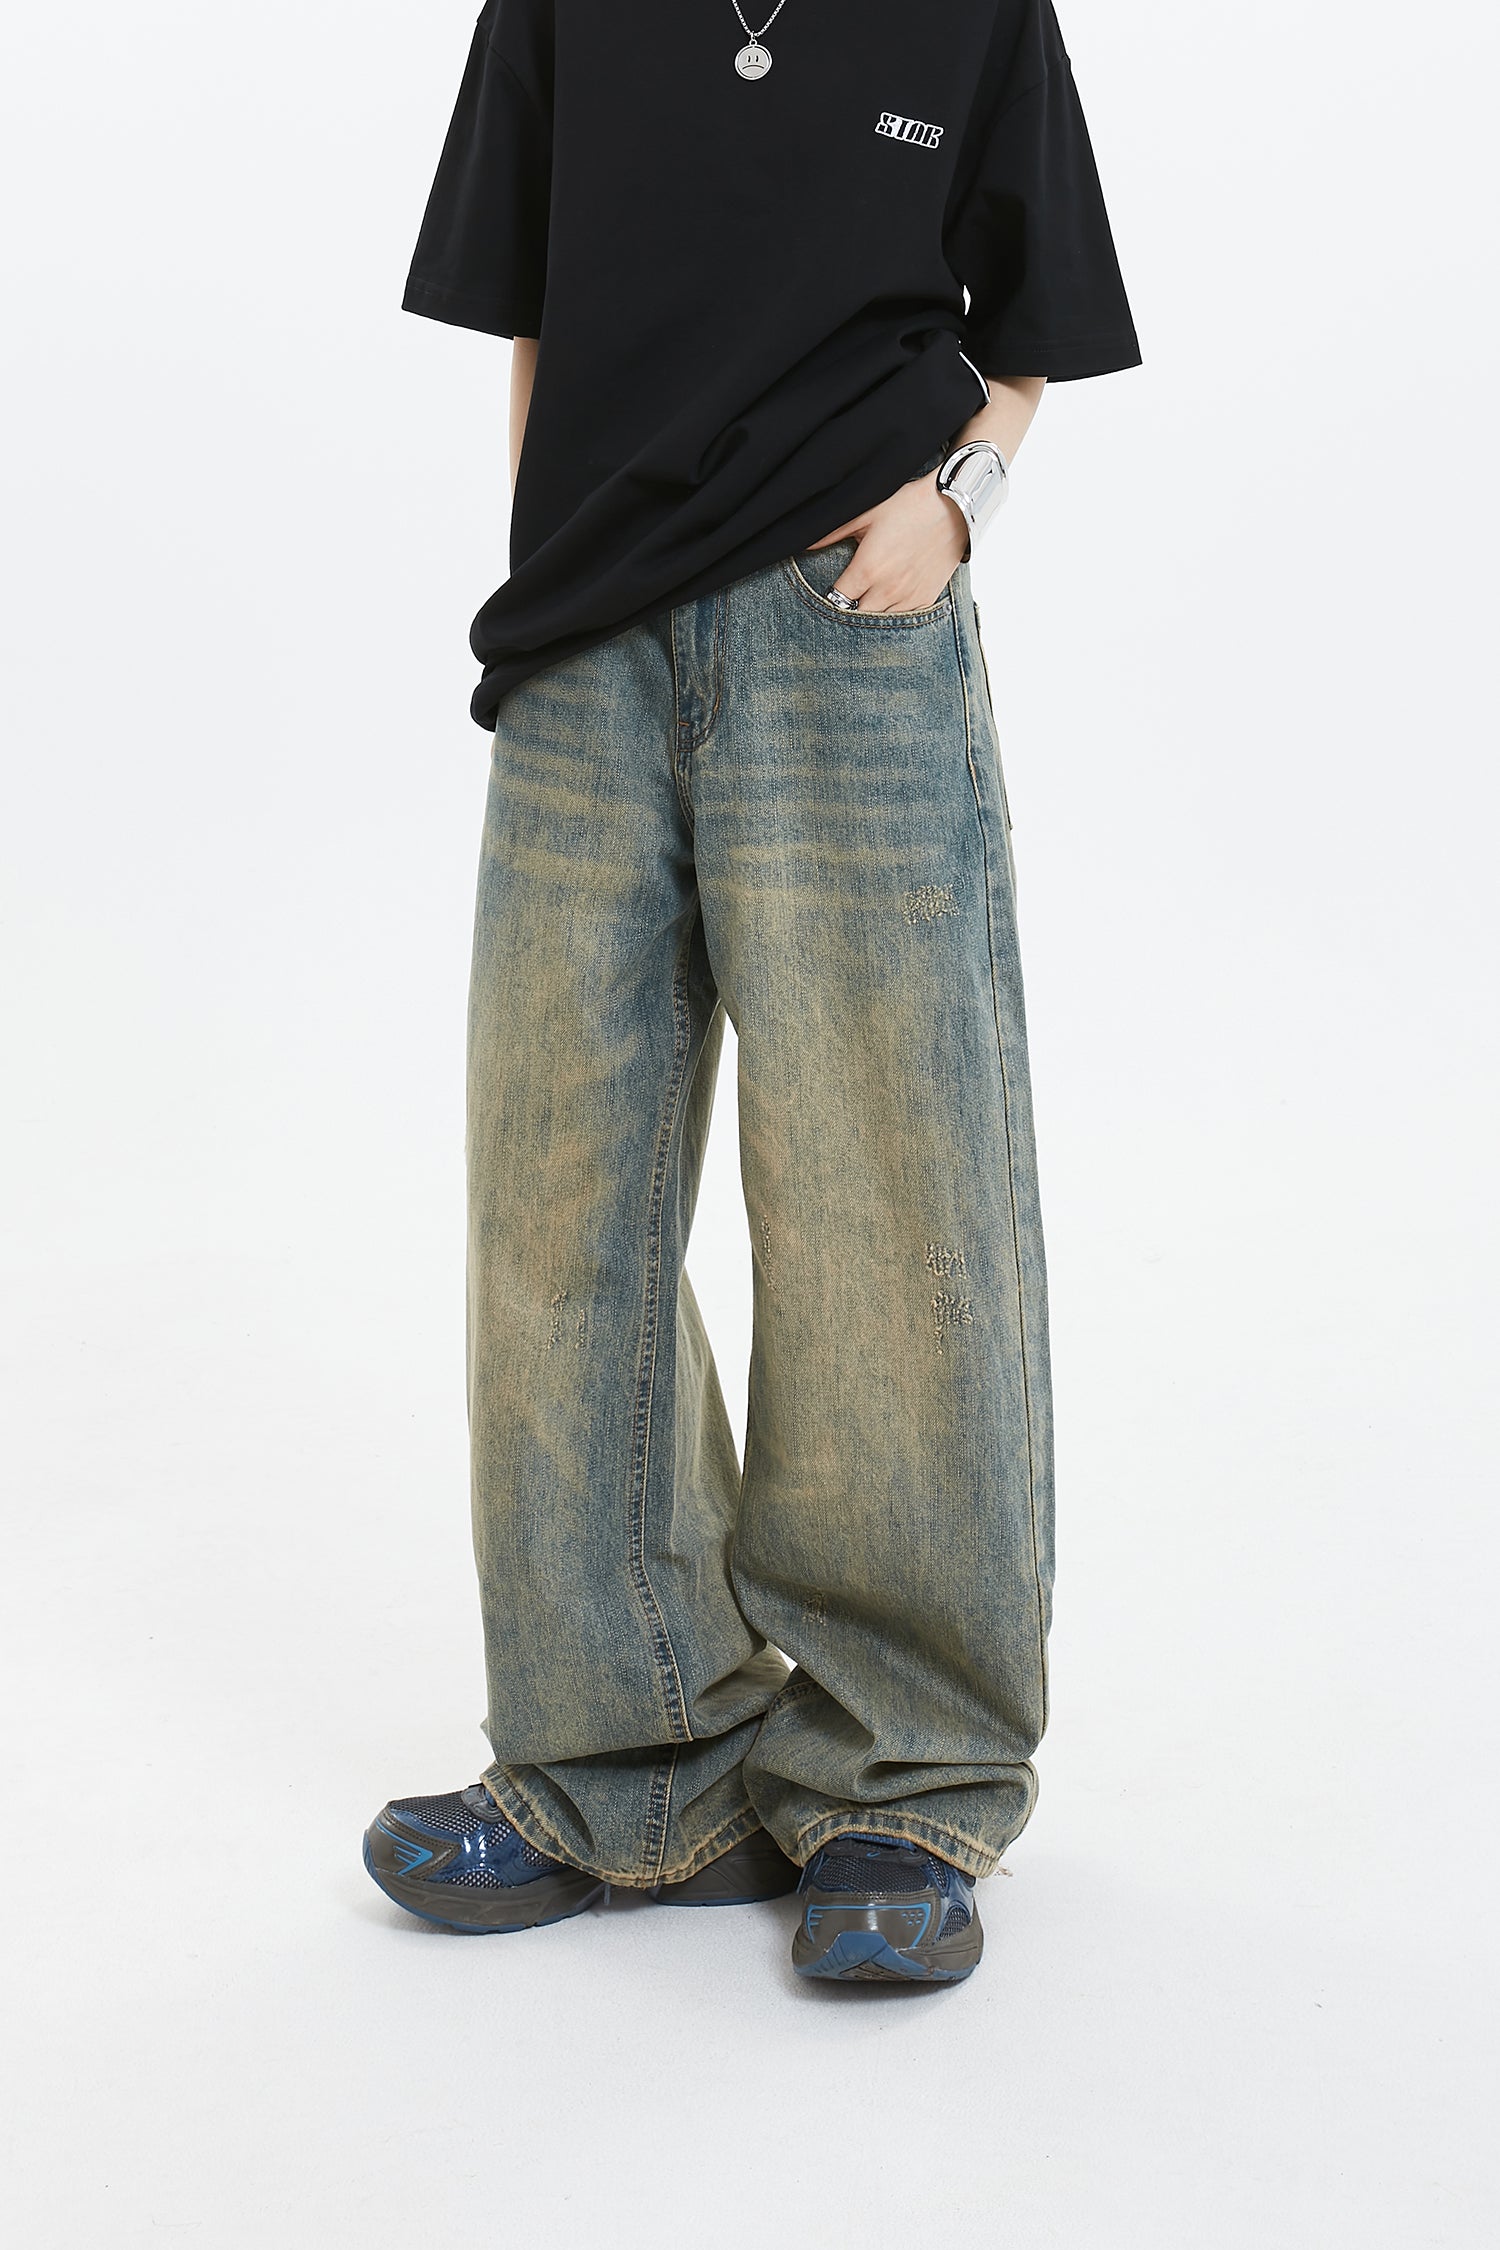 GROUPMAREK [GMK] Wide Leg Jeansファッション - パンツ